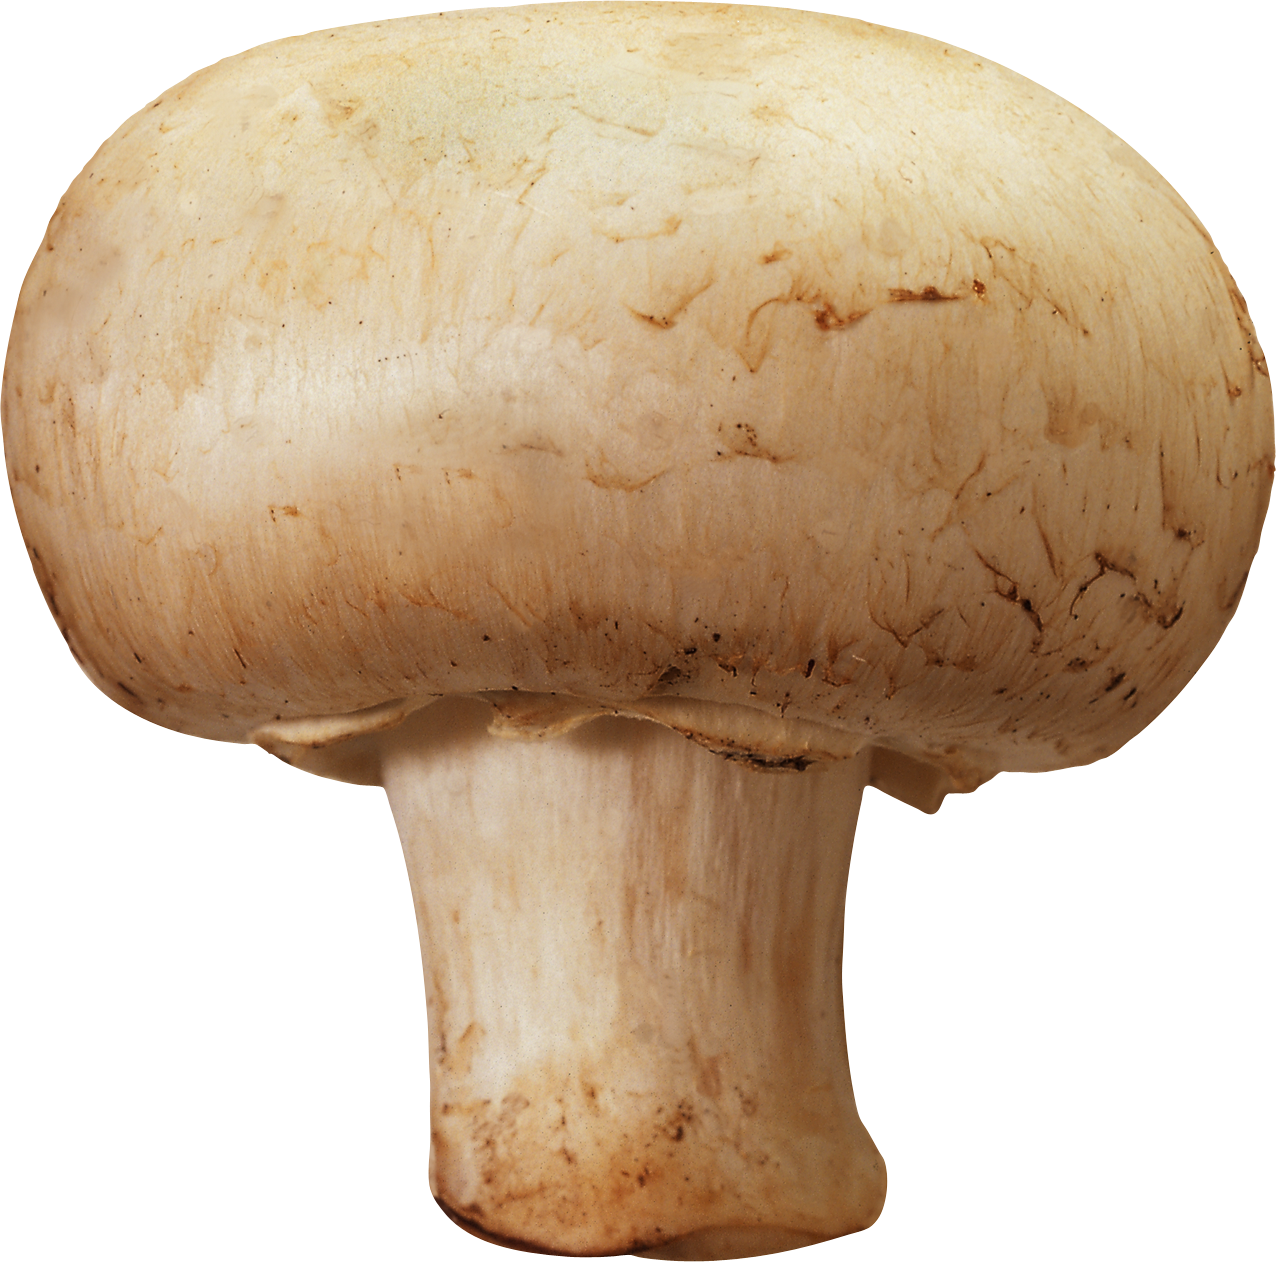 Png image purepng free. Mushroom clipart brown mushroom